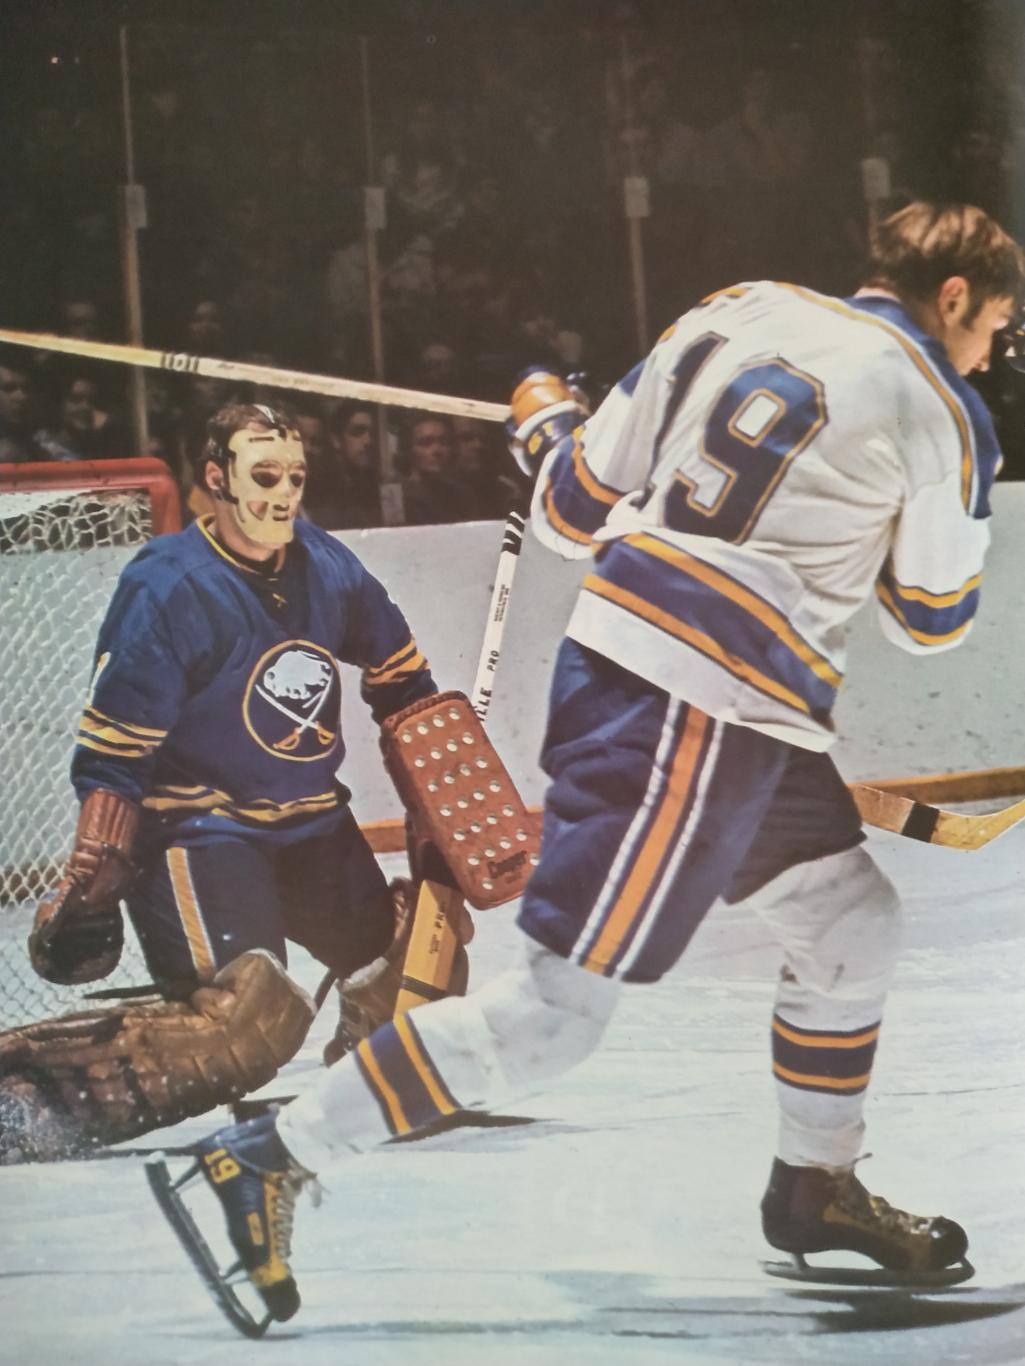 ХОККЕЙ ПРОГРАММА АЛЬБОМ БАФФАЛО НХЛ NHL 1971 OCT.16 BUFFALO PROGRAM 6